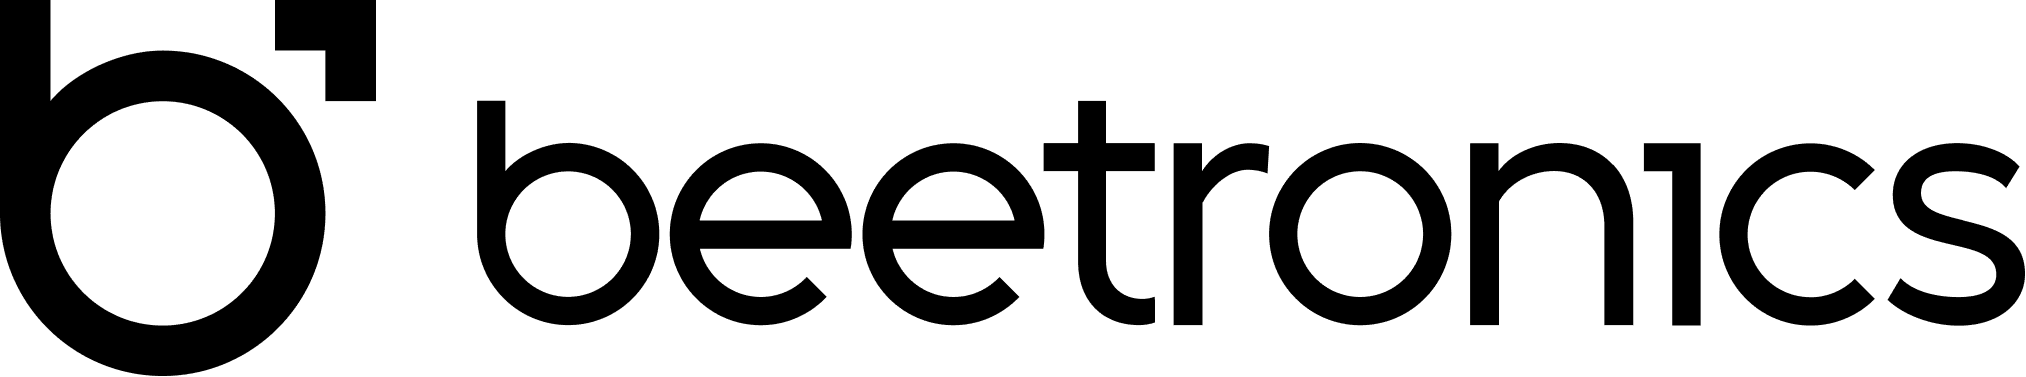 Beetronics | Professional Monitors and Touchscreens